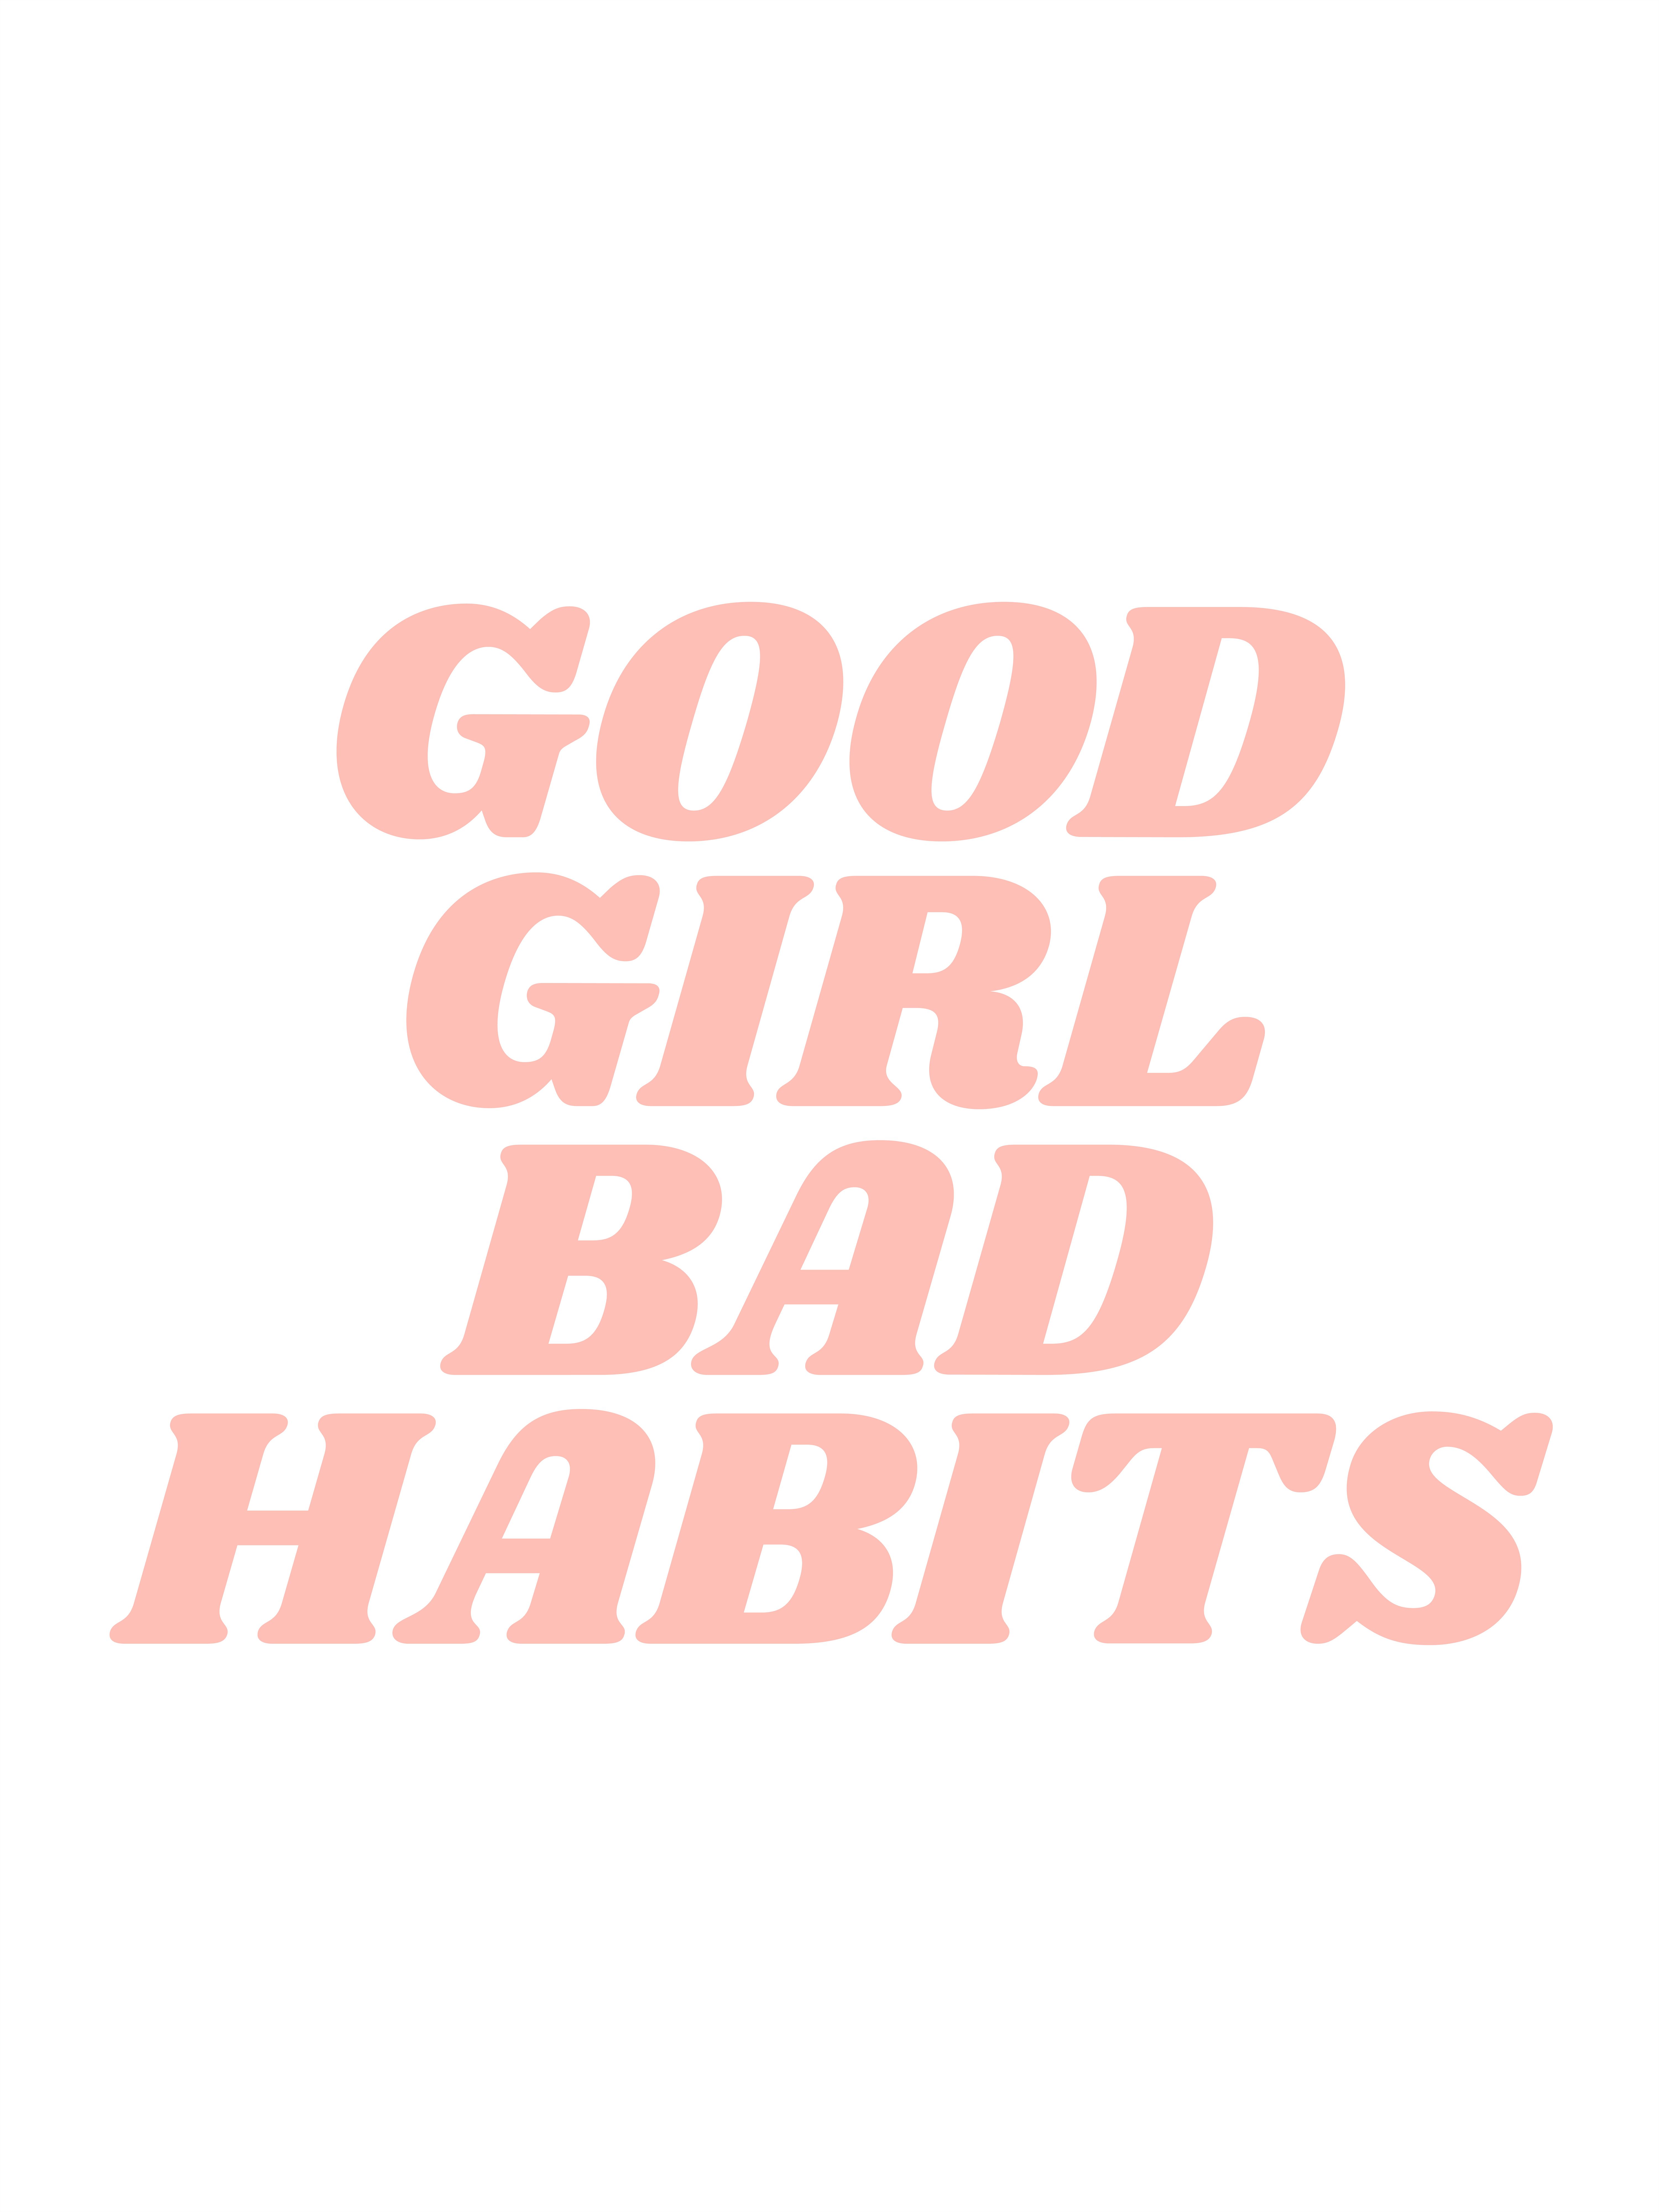 good girl bad habits. Bad girl wallpaper, Pink tumblr aesthetic, Bad girl quotes